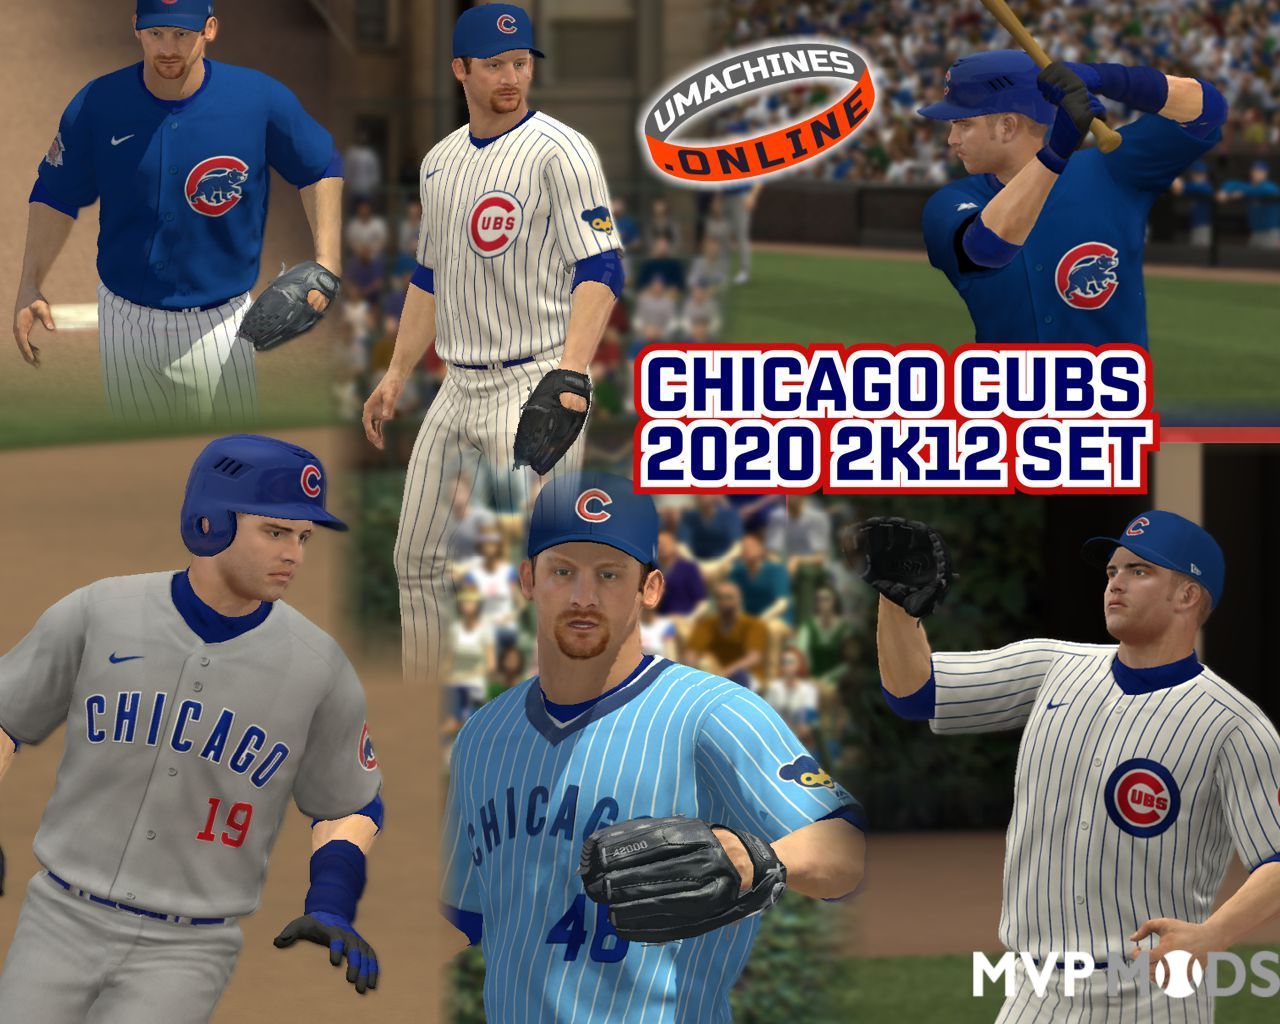 2021 Chicago Cubs uniforms - Uniforms - MVP Mods